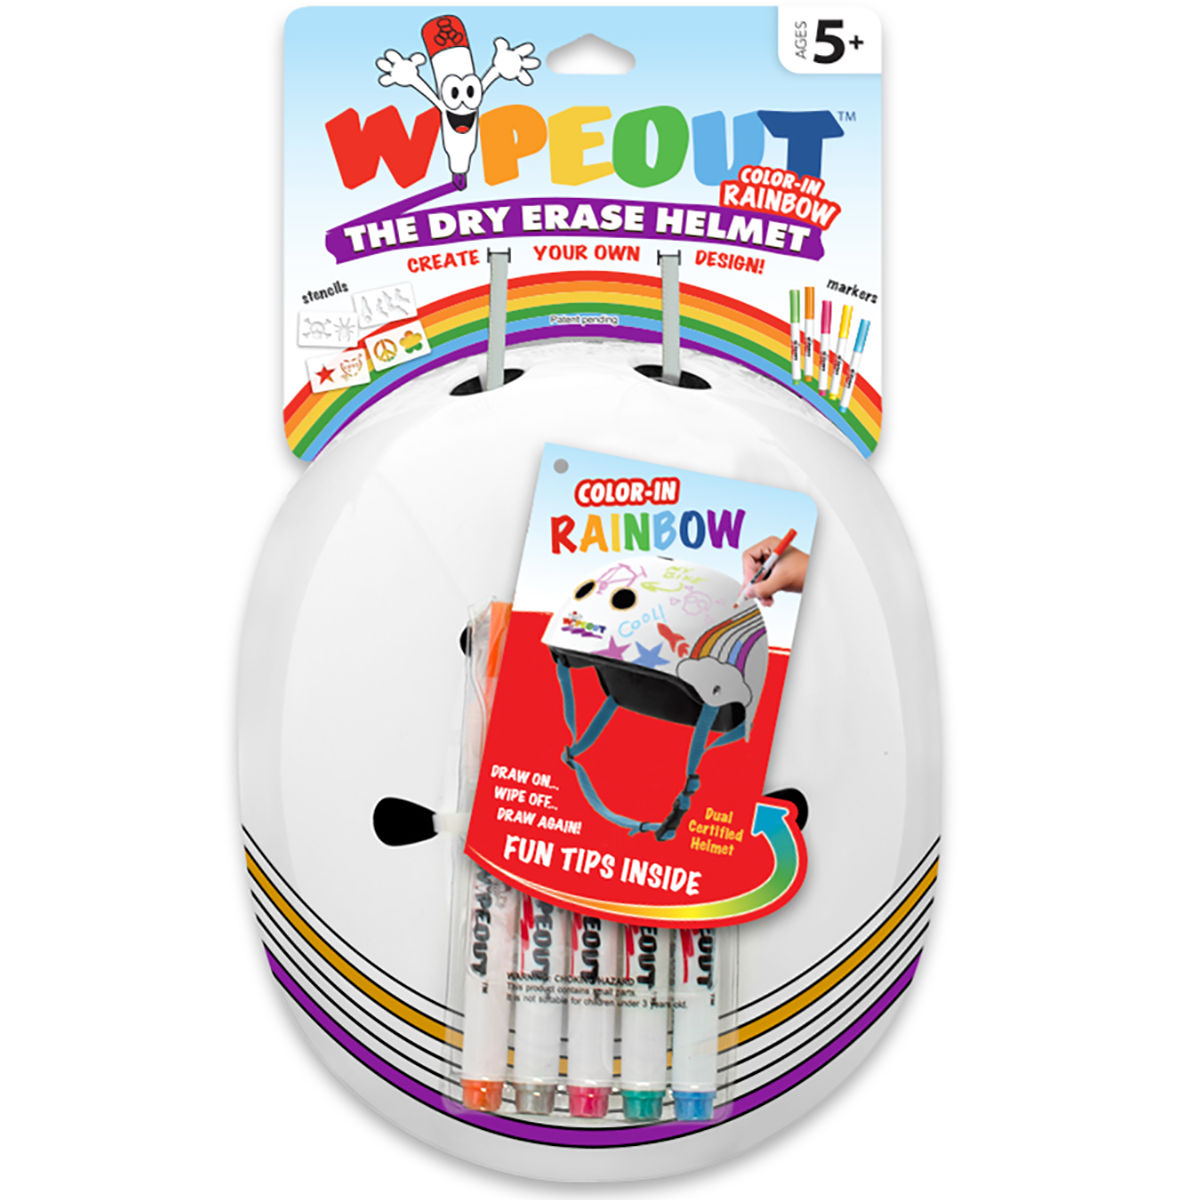 Шлем защитный спортивный WIPEOUT White Rainbow с фломастерами и трафаретами размер M 5+ обхват головы 49-52 см - фото 3